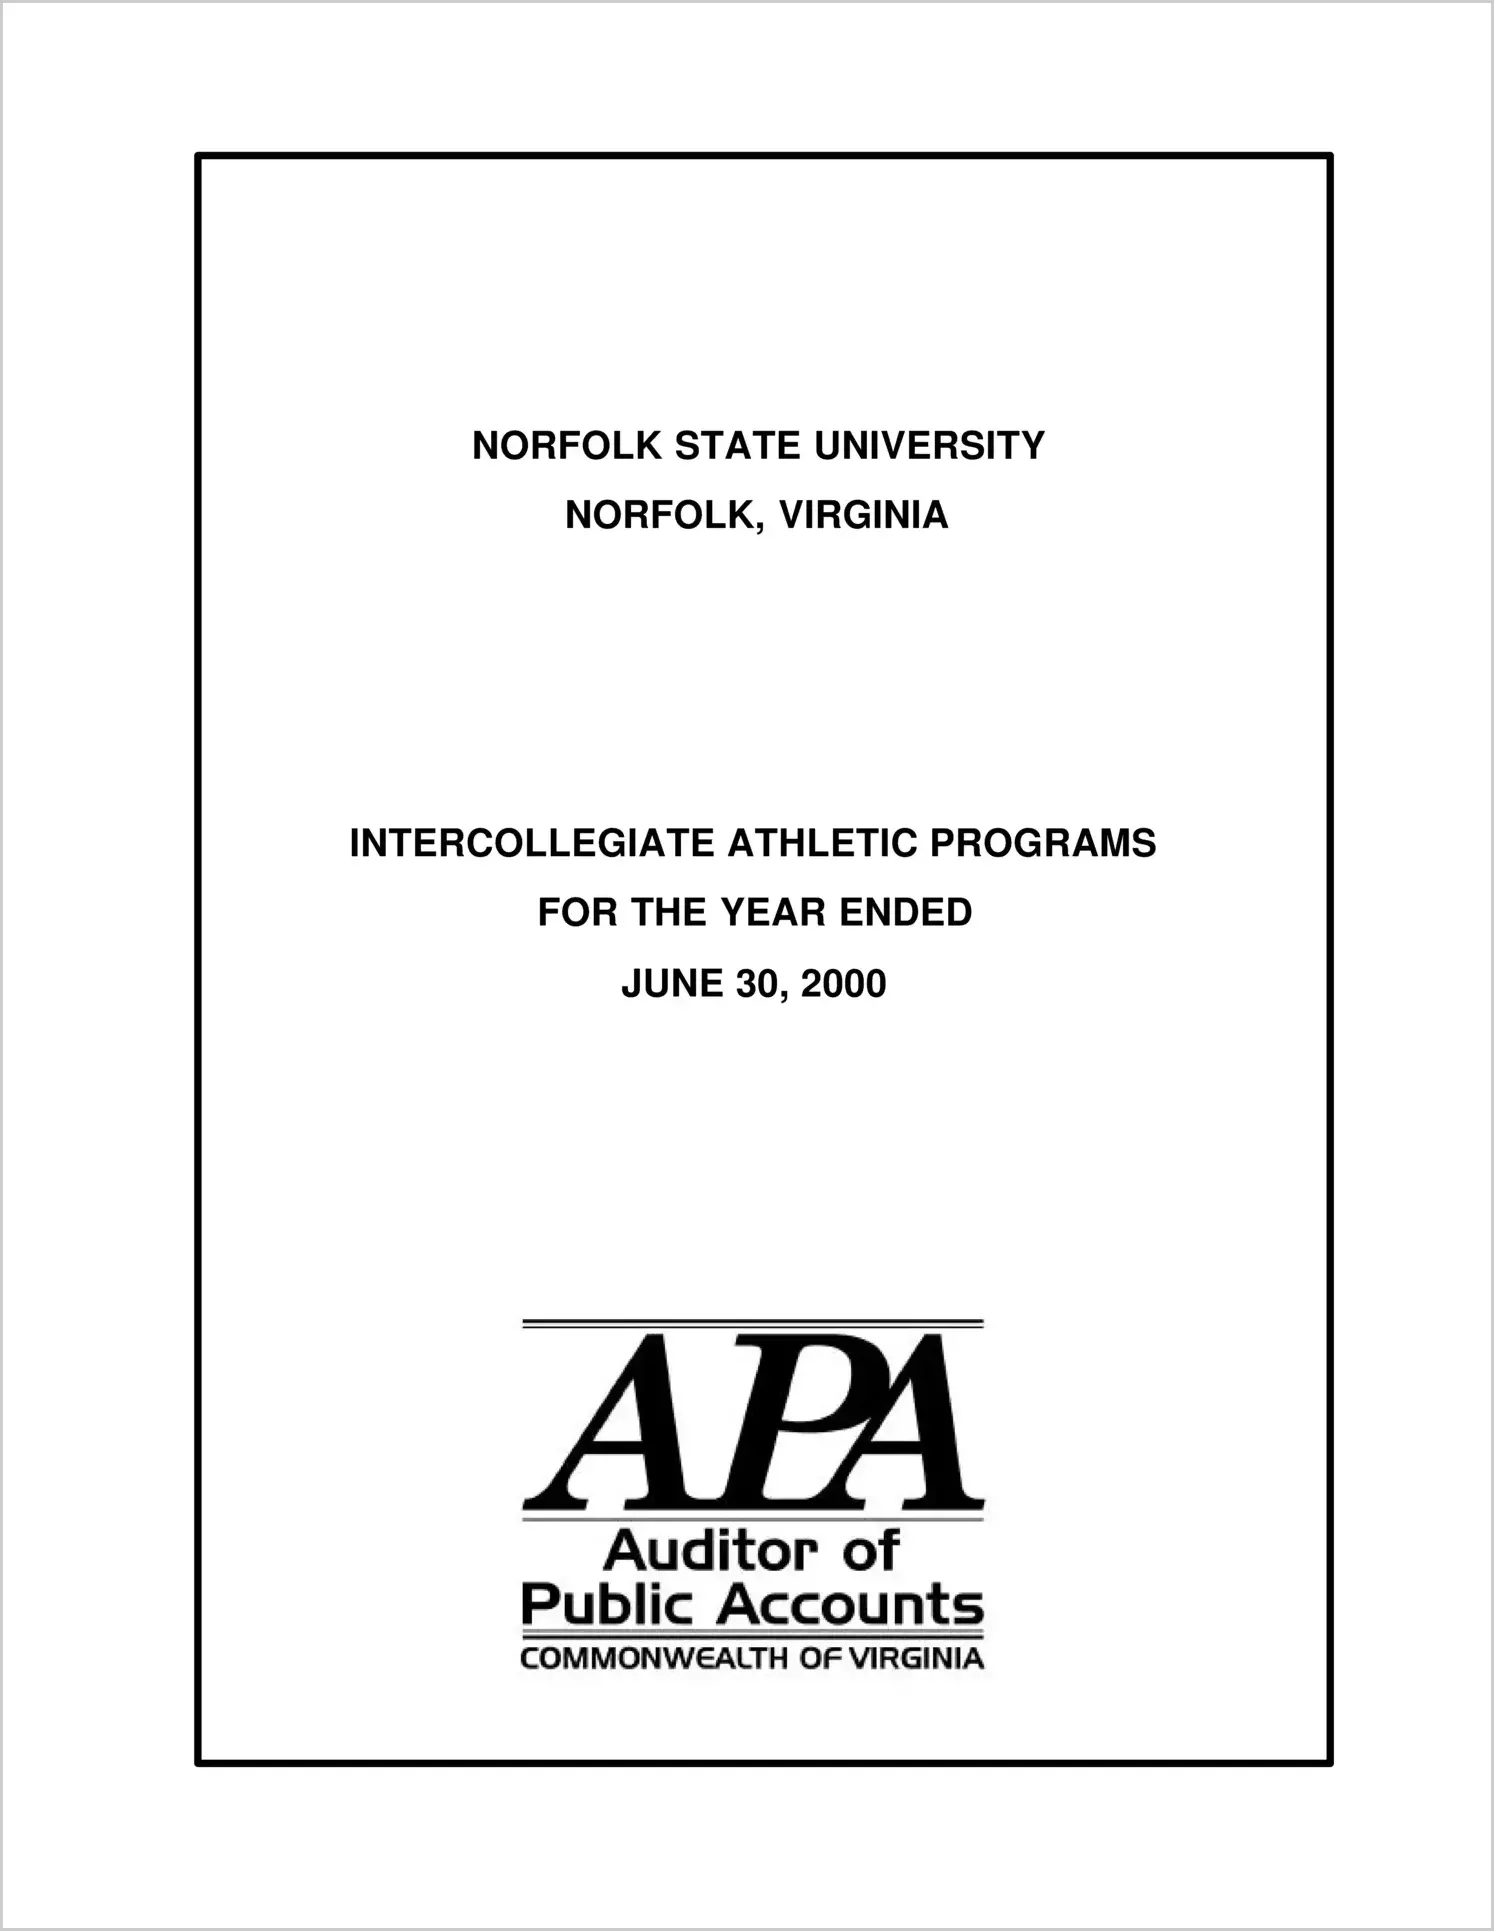 Norfolk State University Intercollegiate Athletic Programs for the year ended June 30, 2000